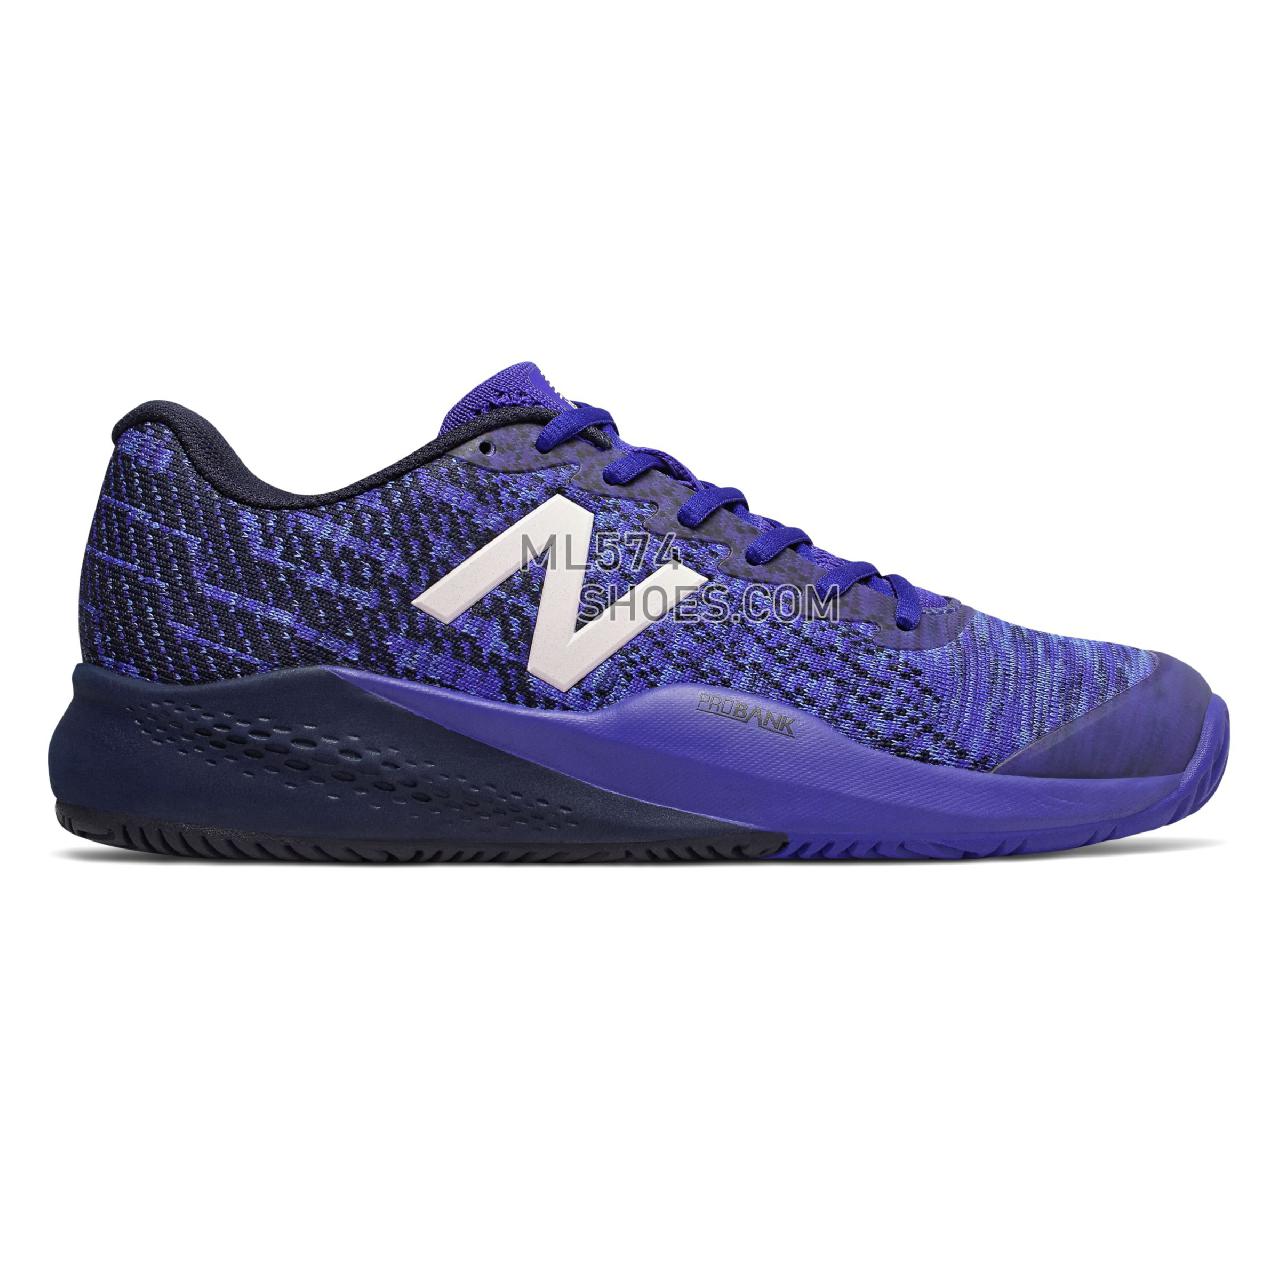 New Balance 996v3 - Men's Tennis - UV Blue with Pigment - MCH996V3